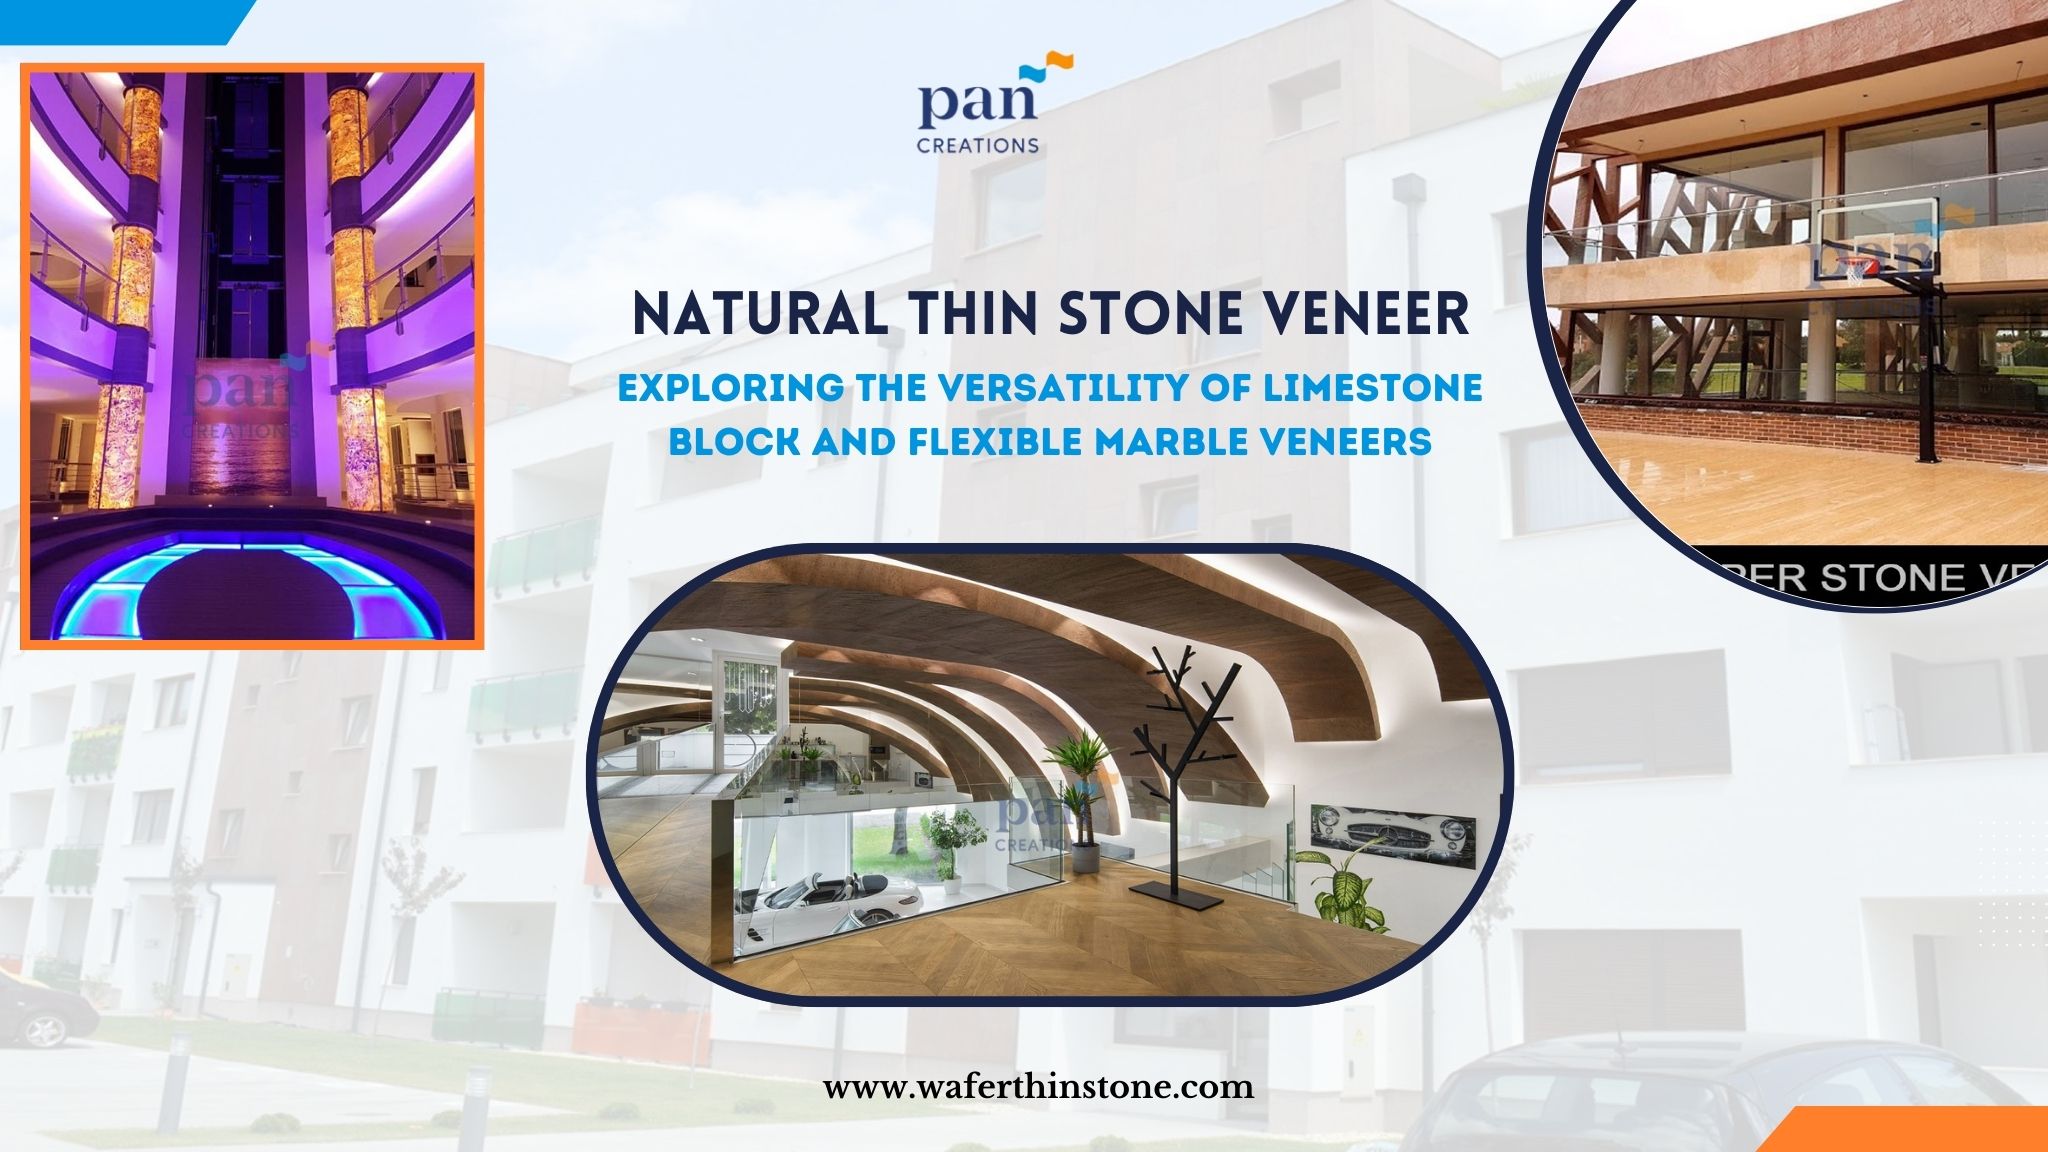 Natural thin stone veneer